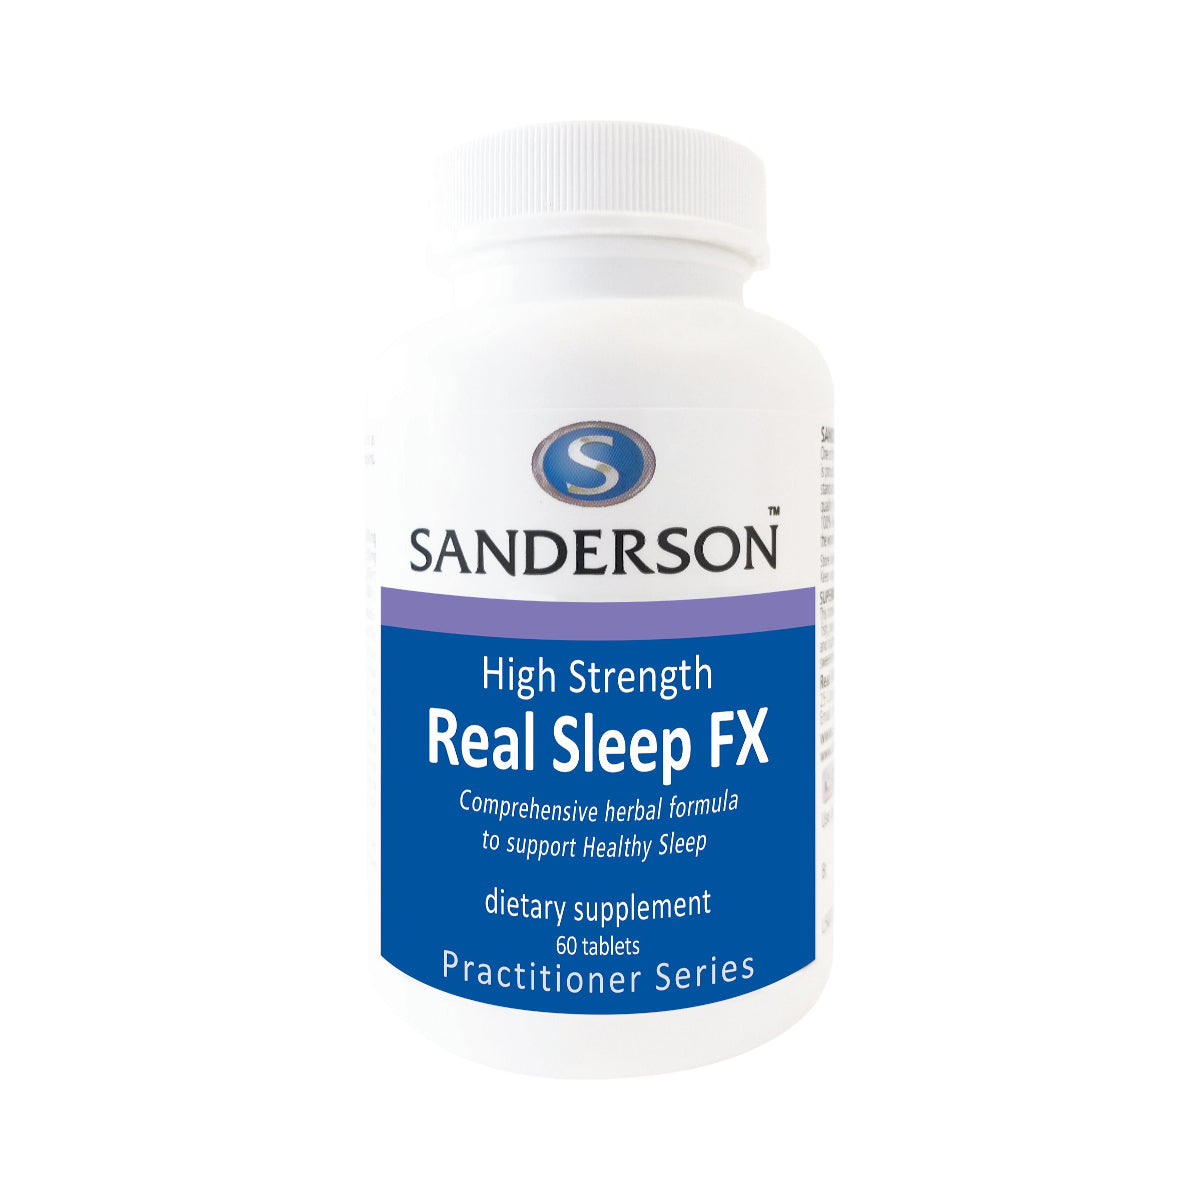 Sanderson High Strength Real Sleep FX